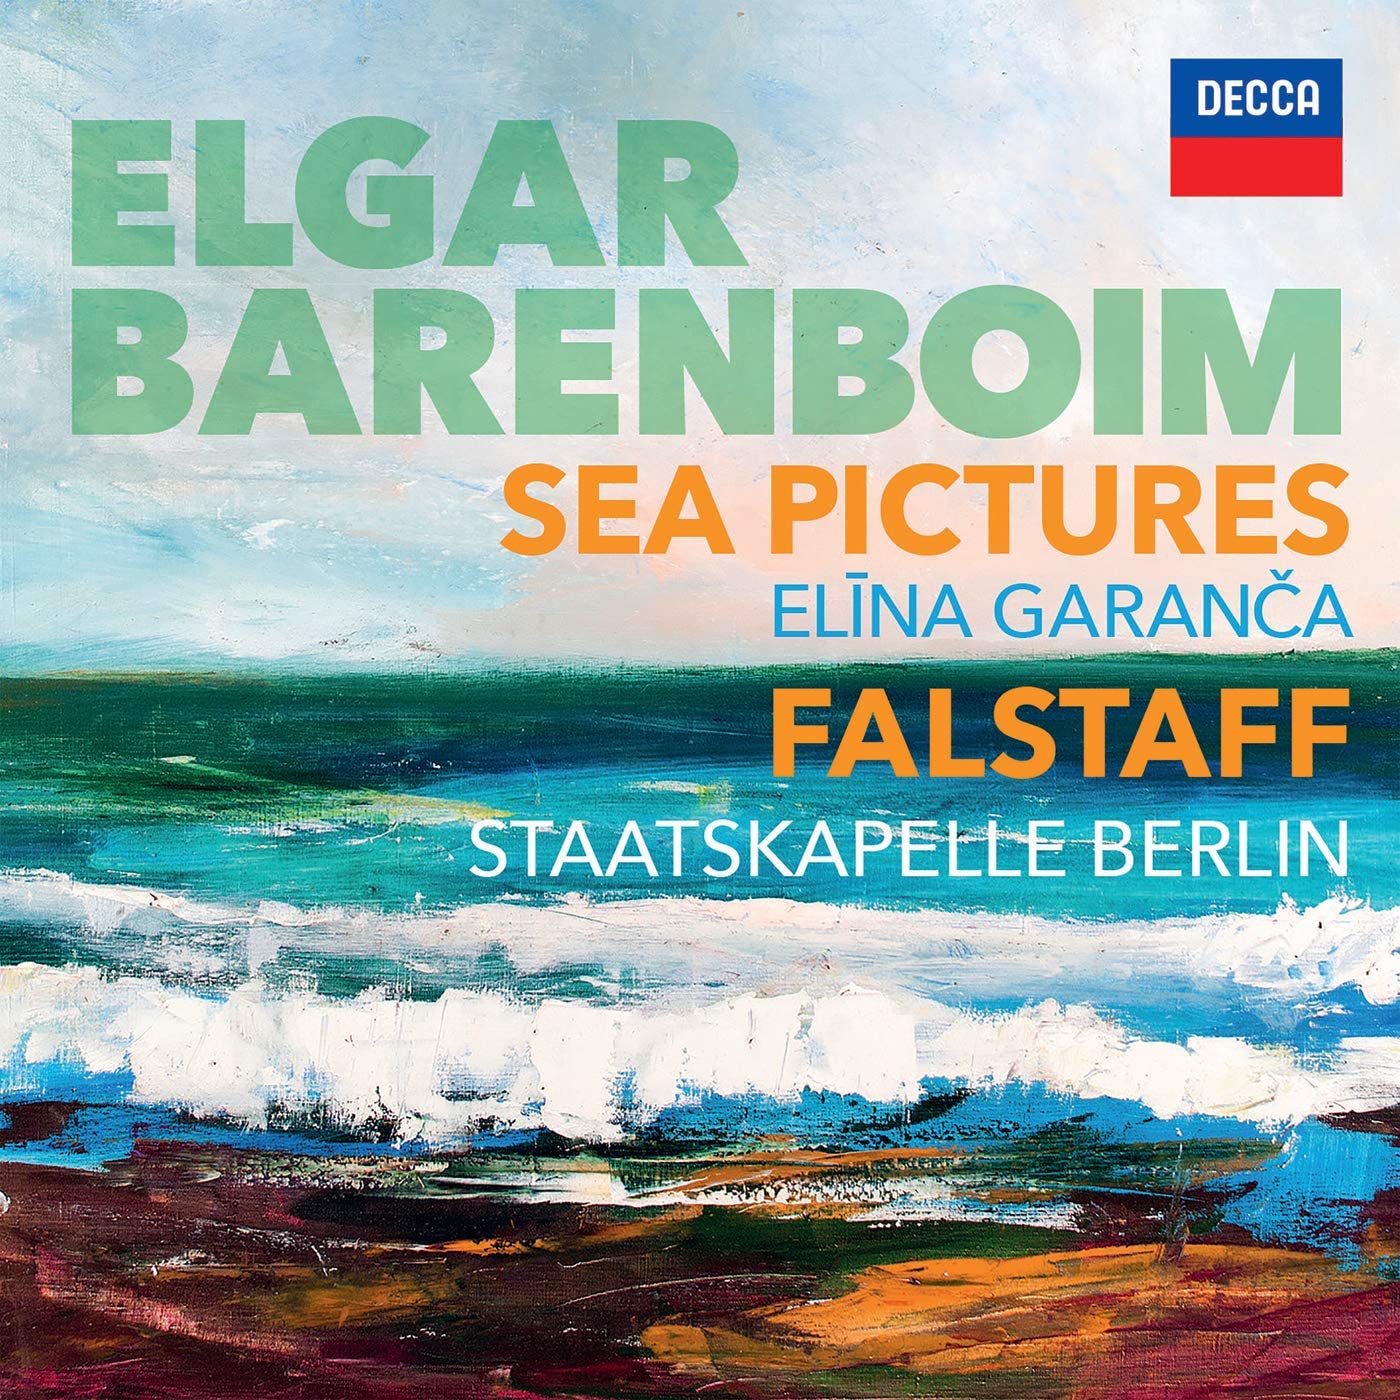 Elgar Falstaff Barenboim